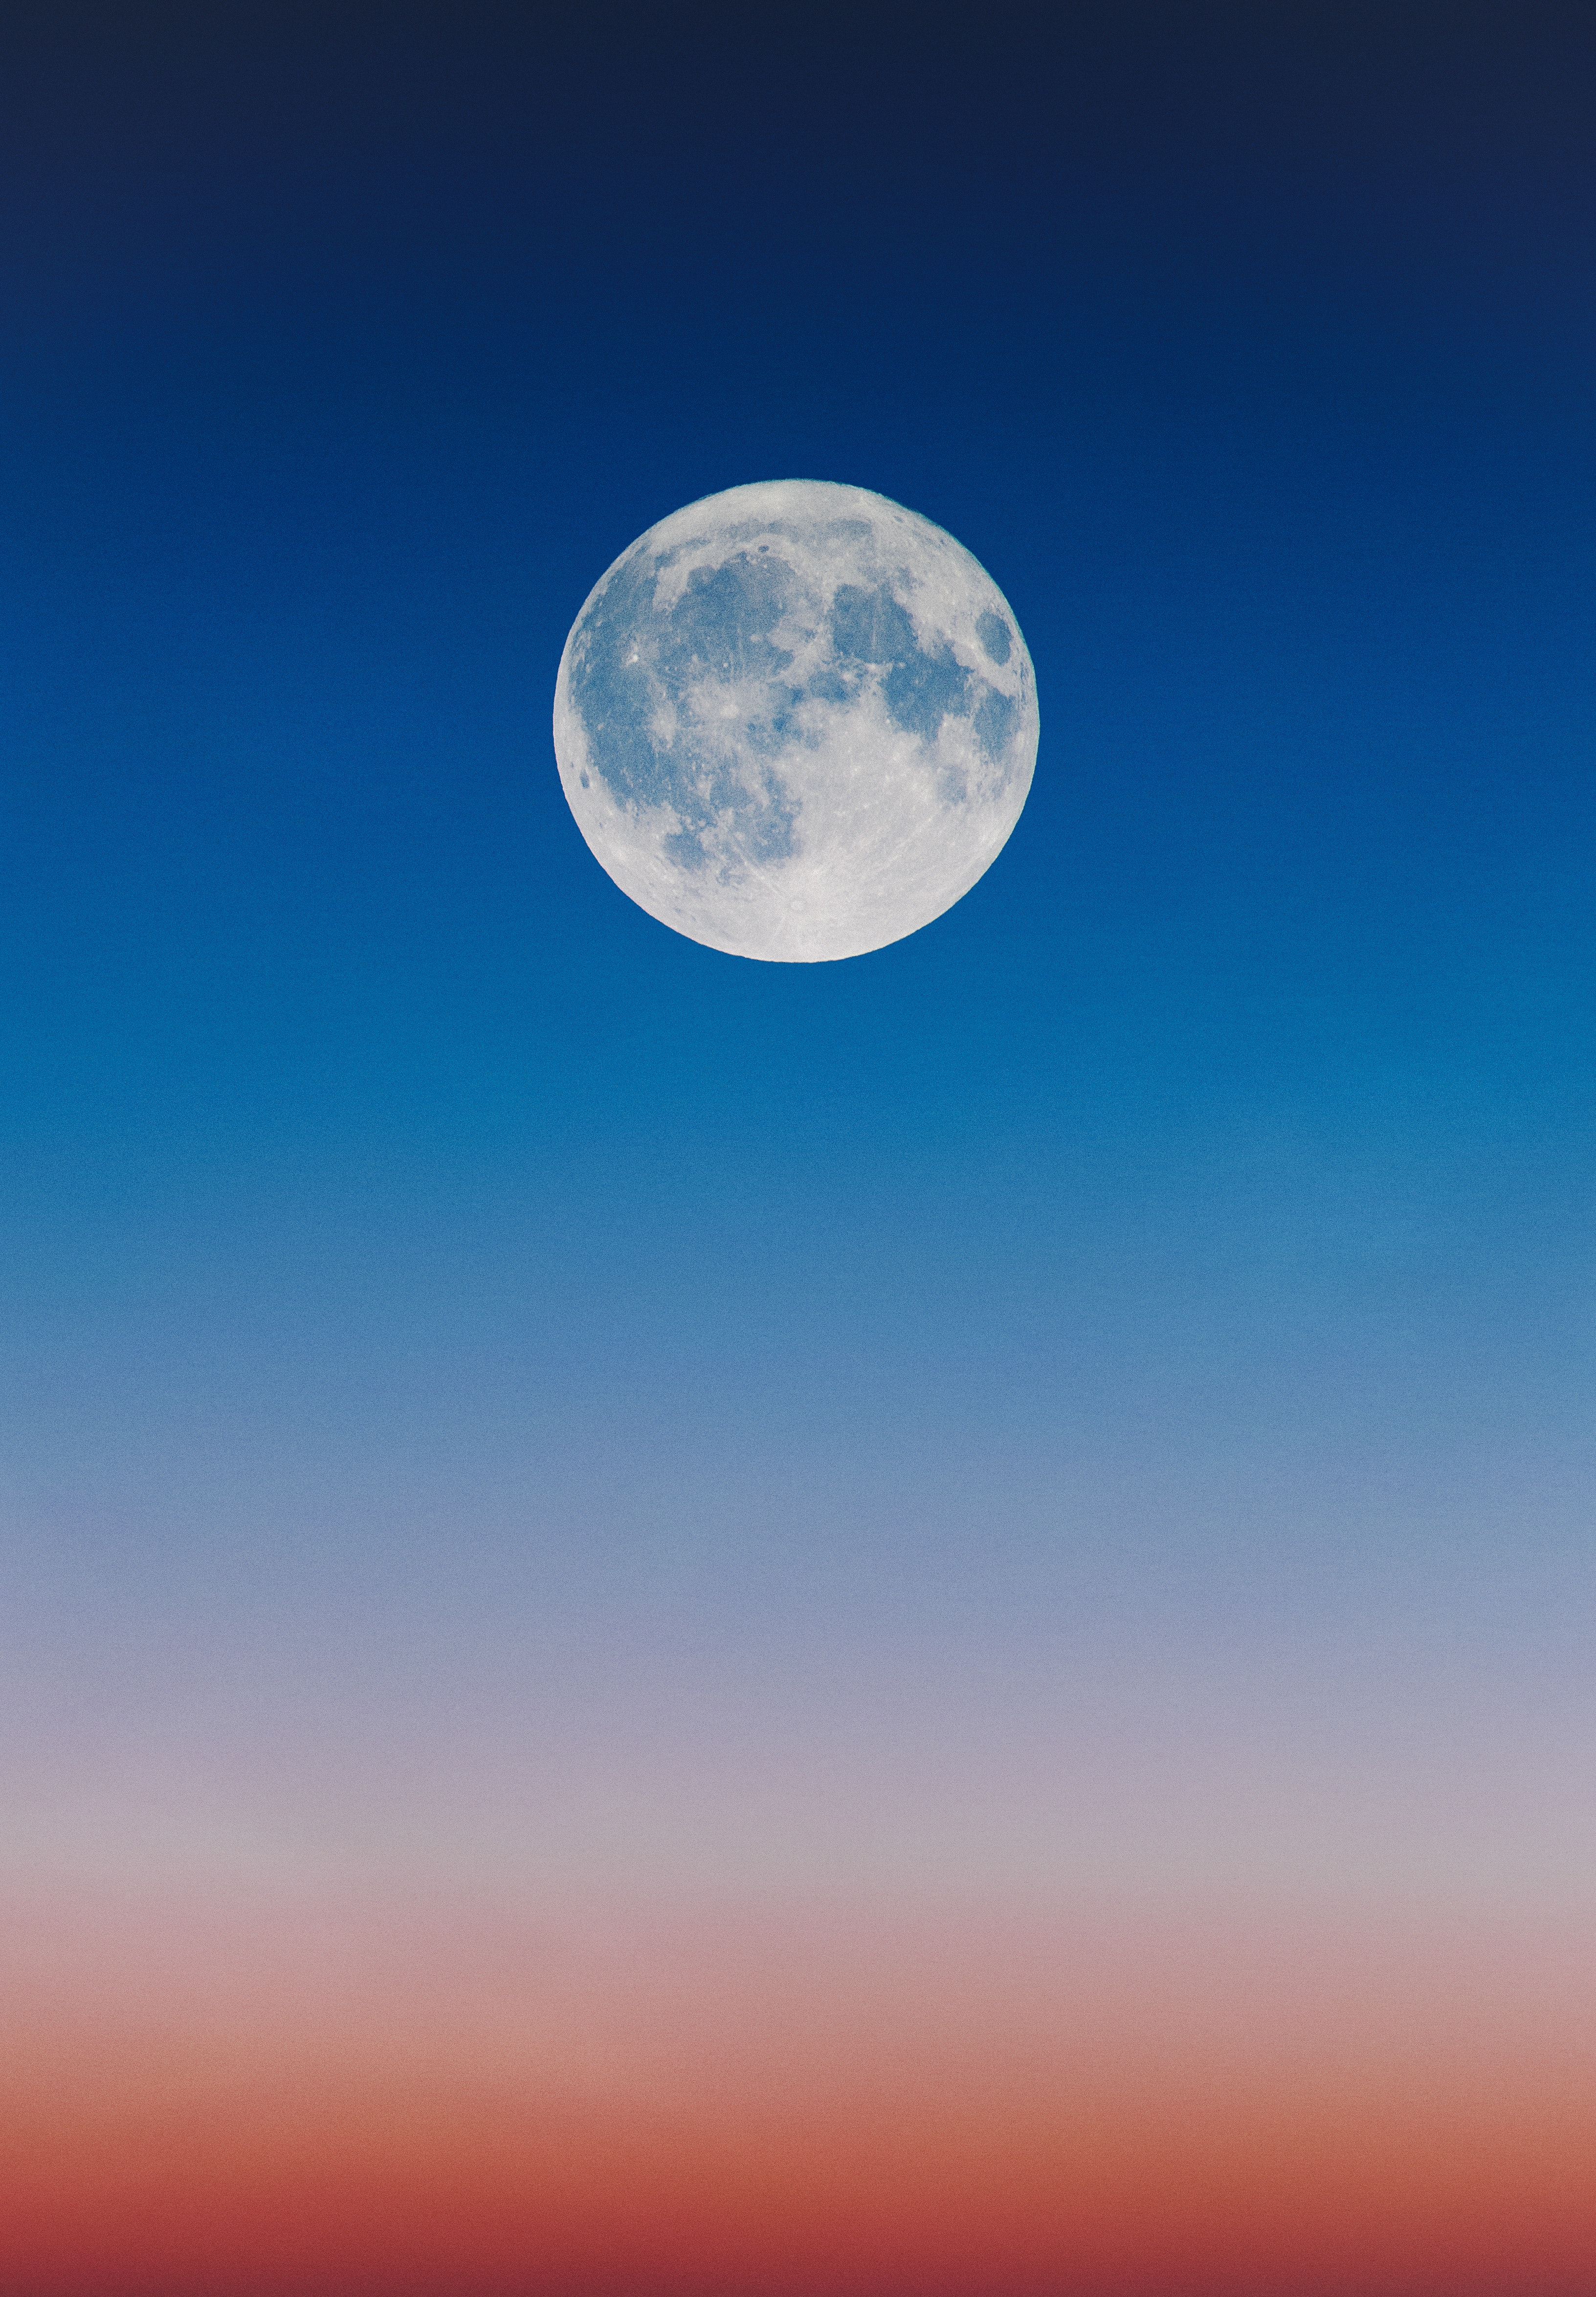 Wallpaper Keren Warna Biru Dan Merah - High Resolution Full Moon